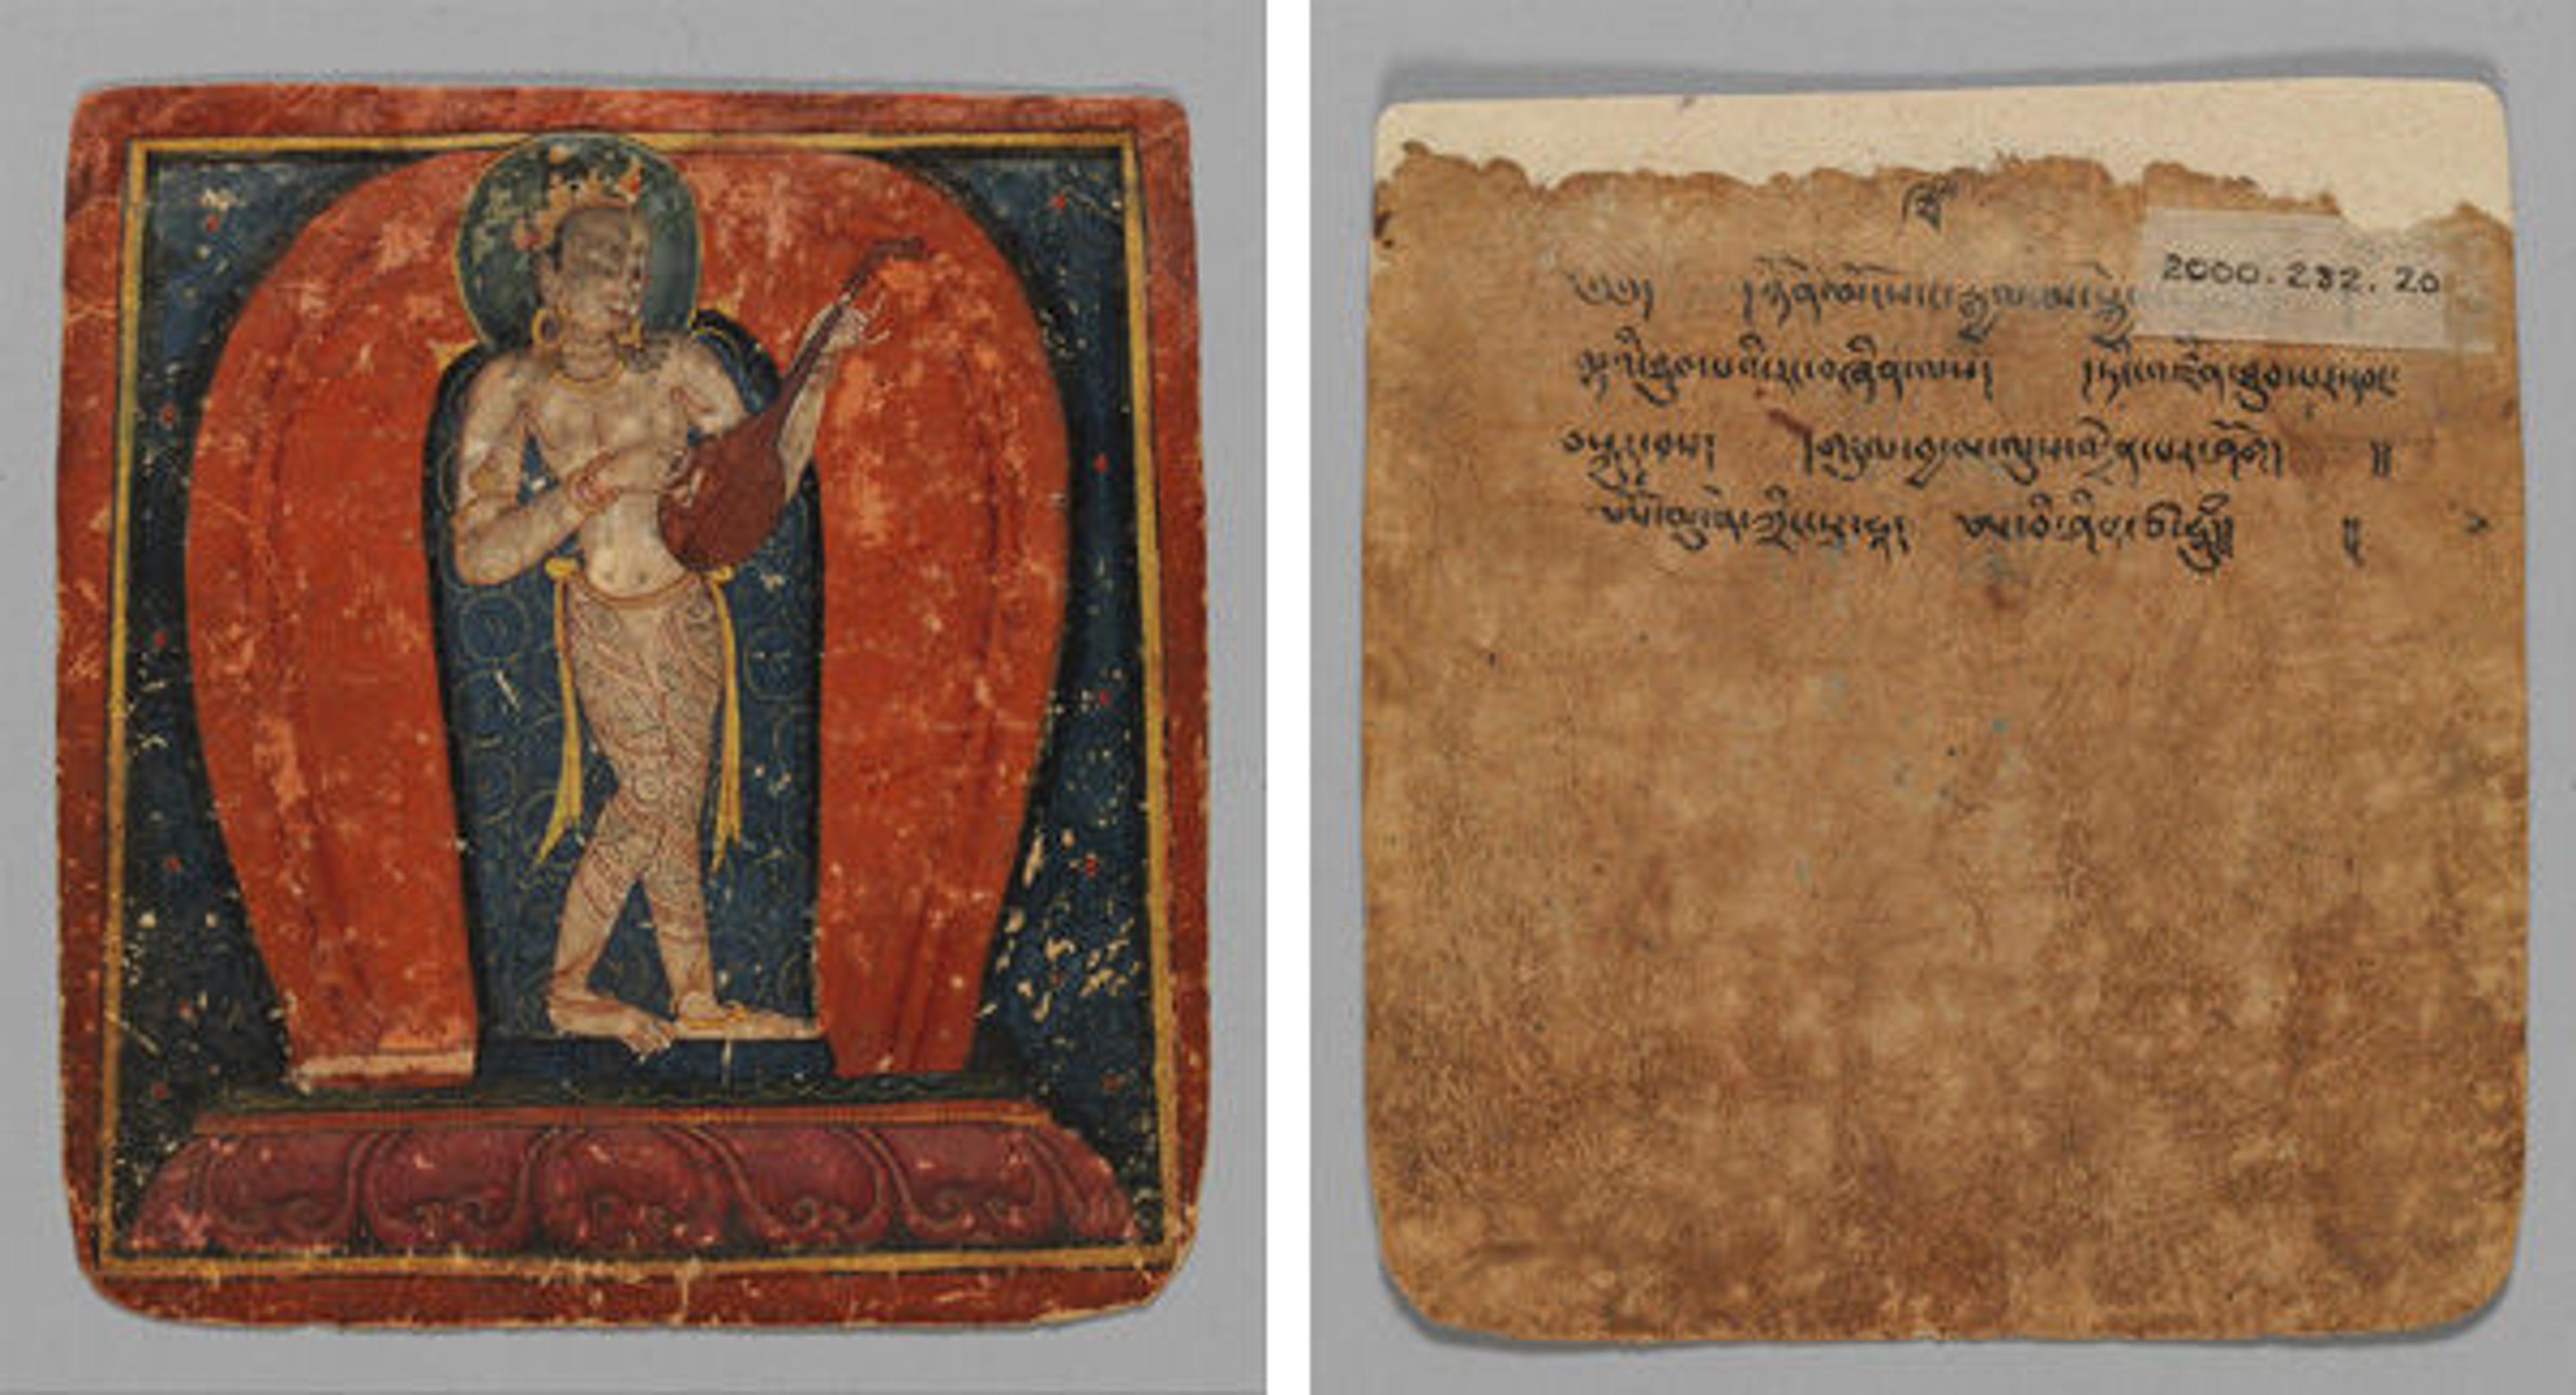 Initiation Card (Tsakalis), early 15th century. Tibet. 2000.282.20